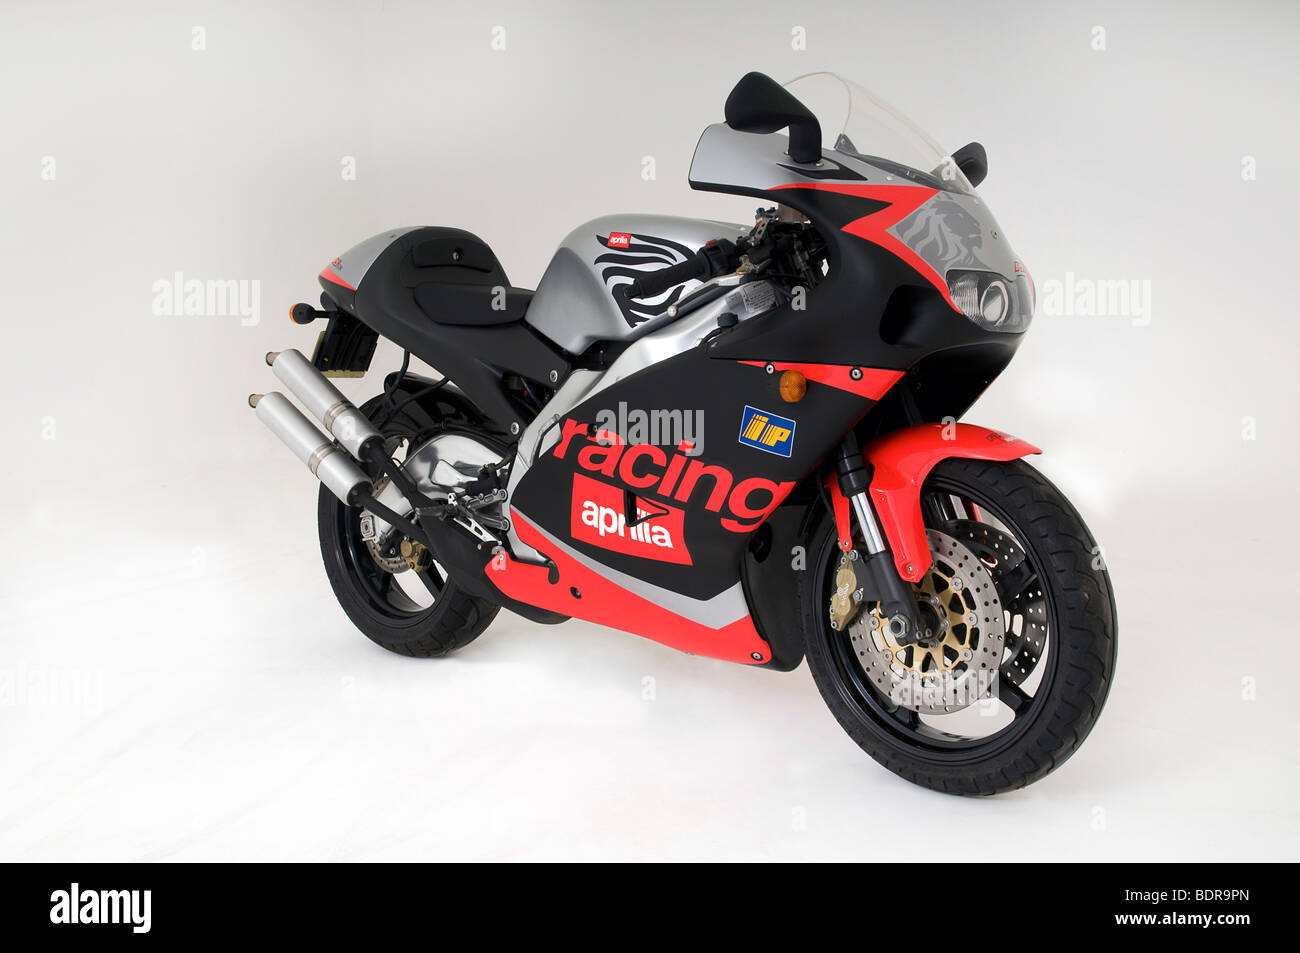 Aprilia motorcycle motorbike bike hi-res stock photography and images -  Alamy